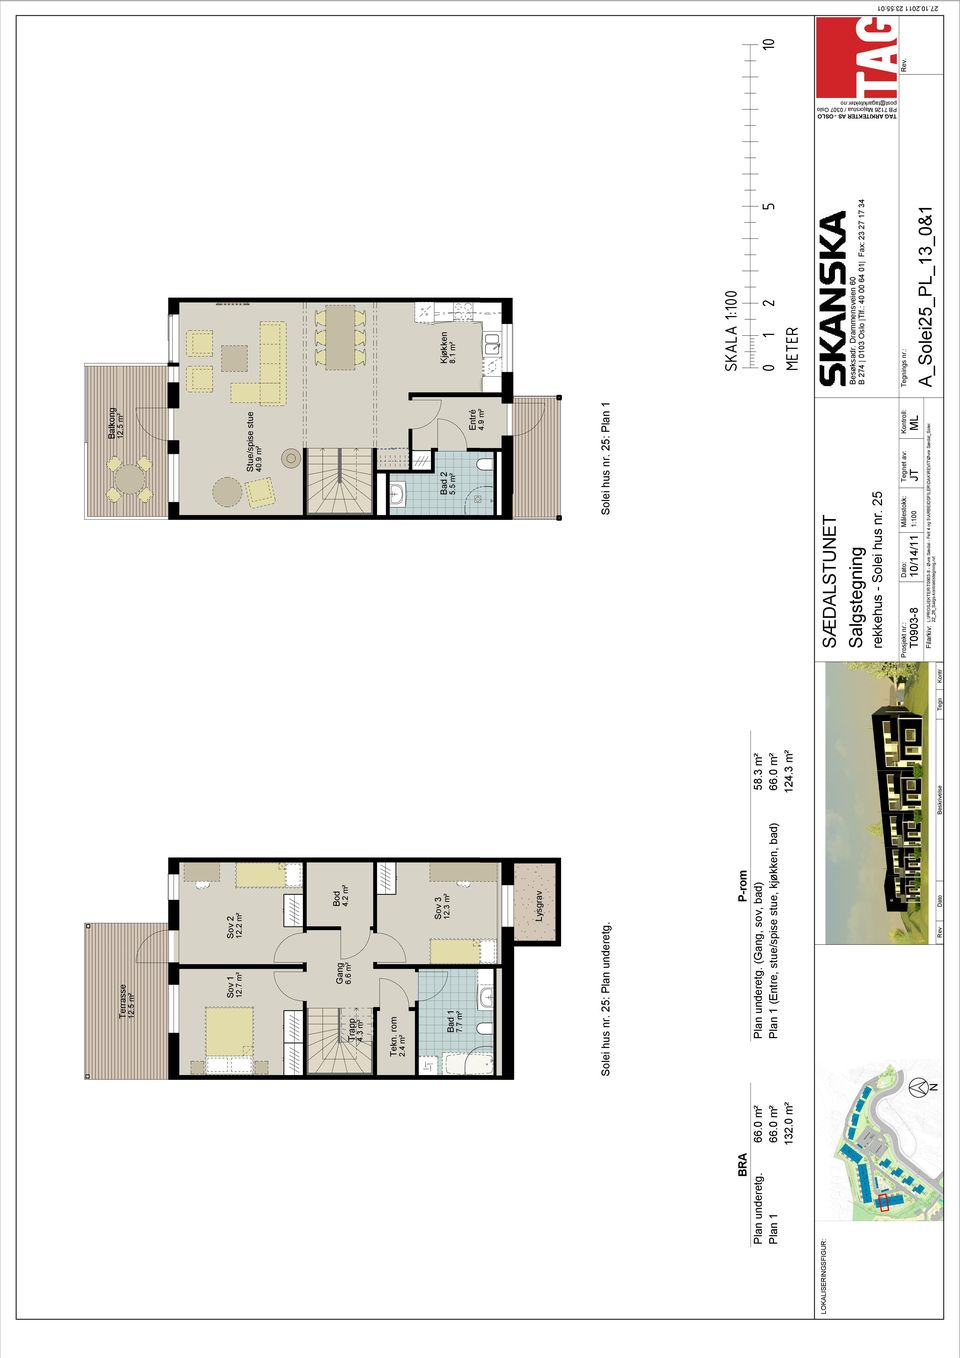 Solei hus nr. 25: Plan 1 P-rom Plan underetg. (Gang, sov, bad) 58.3 m² Plan 1 (Entre, stue/spise stue, kjøkken, bad) 66.